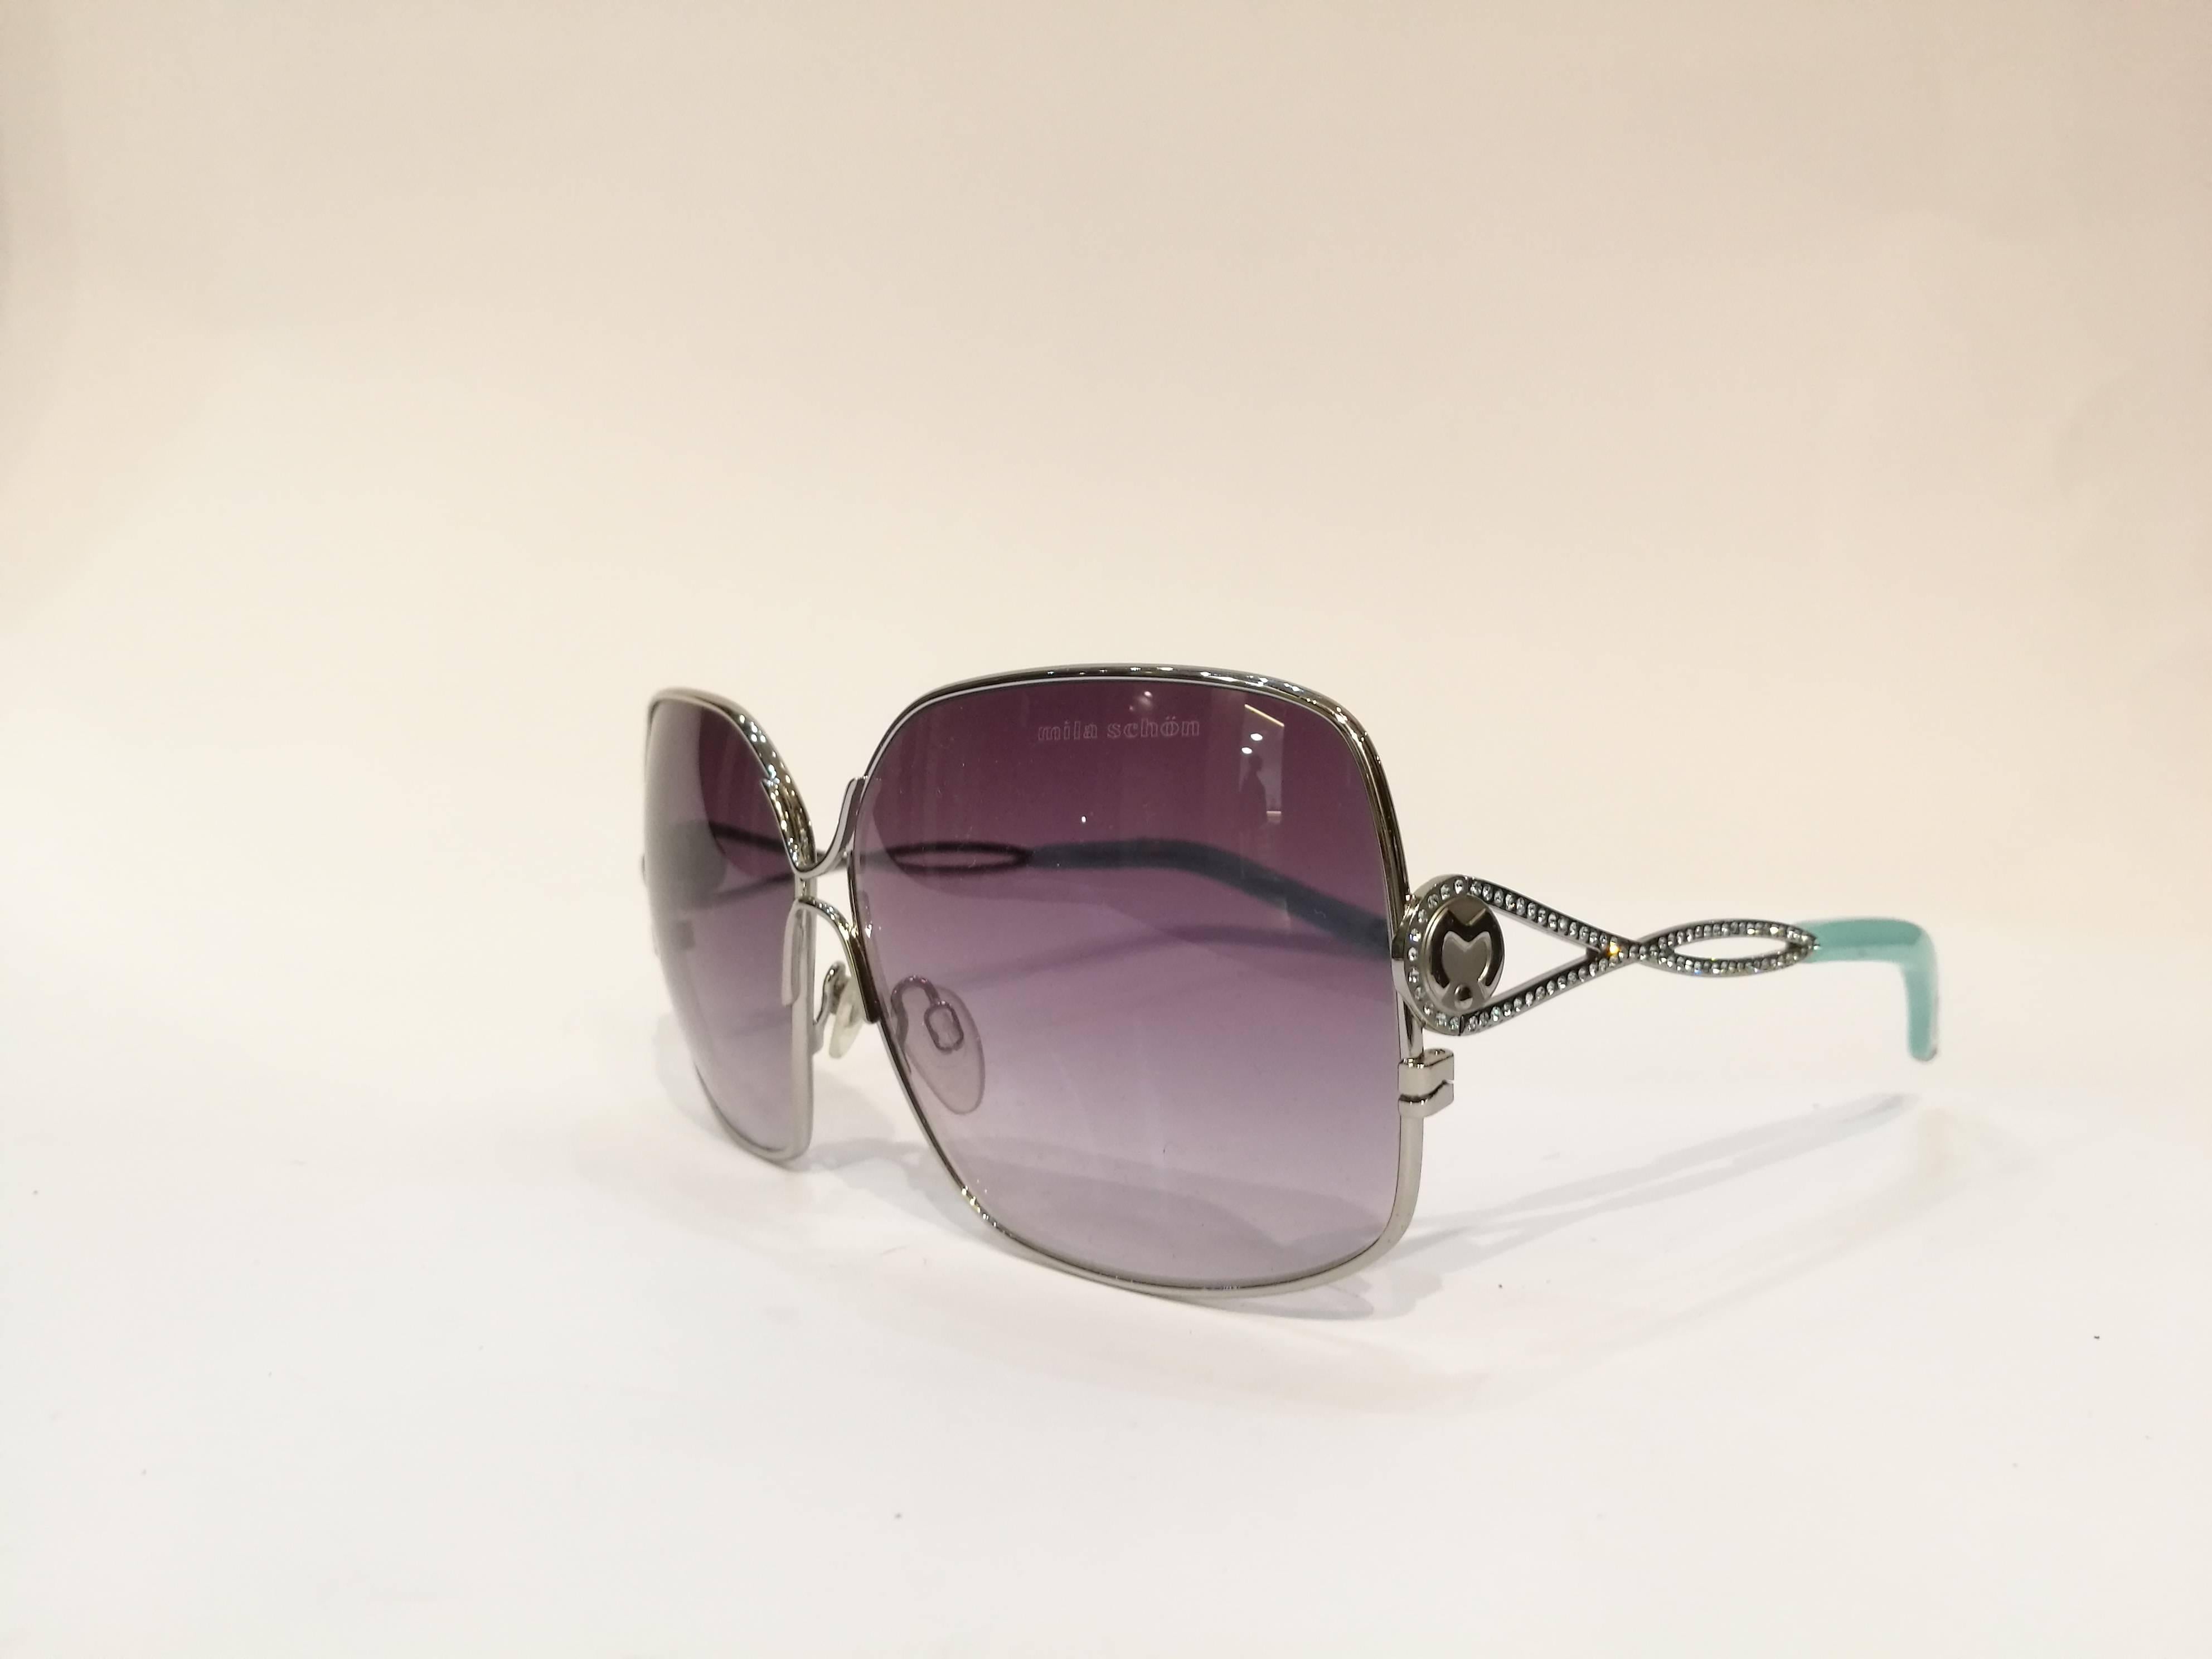 Mila Schon Multitone Sunglasses
Purple tone glass light blu lents